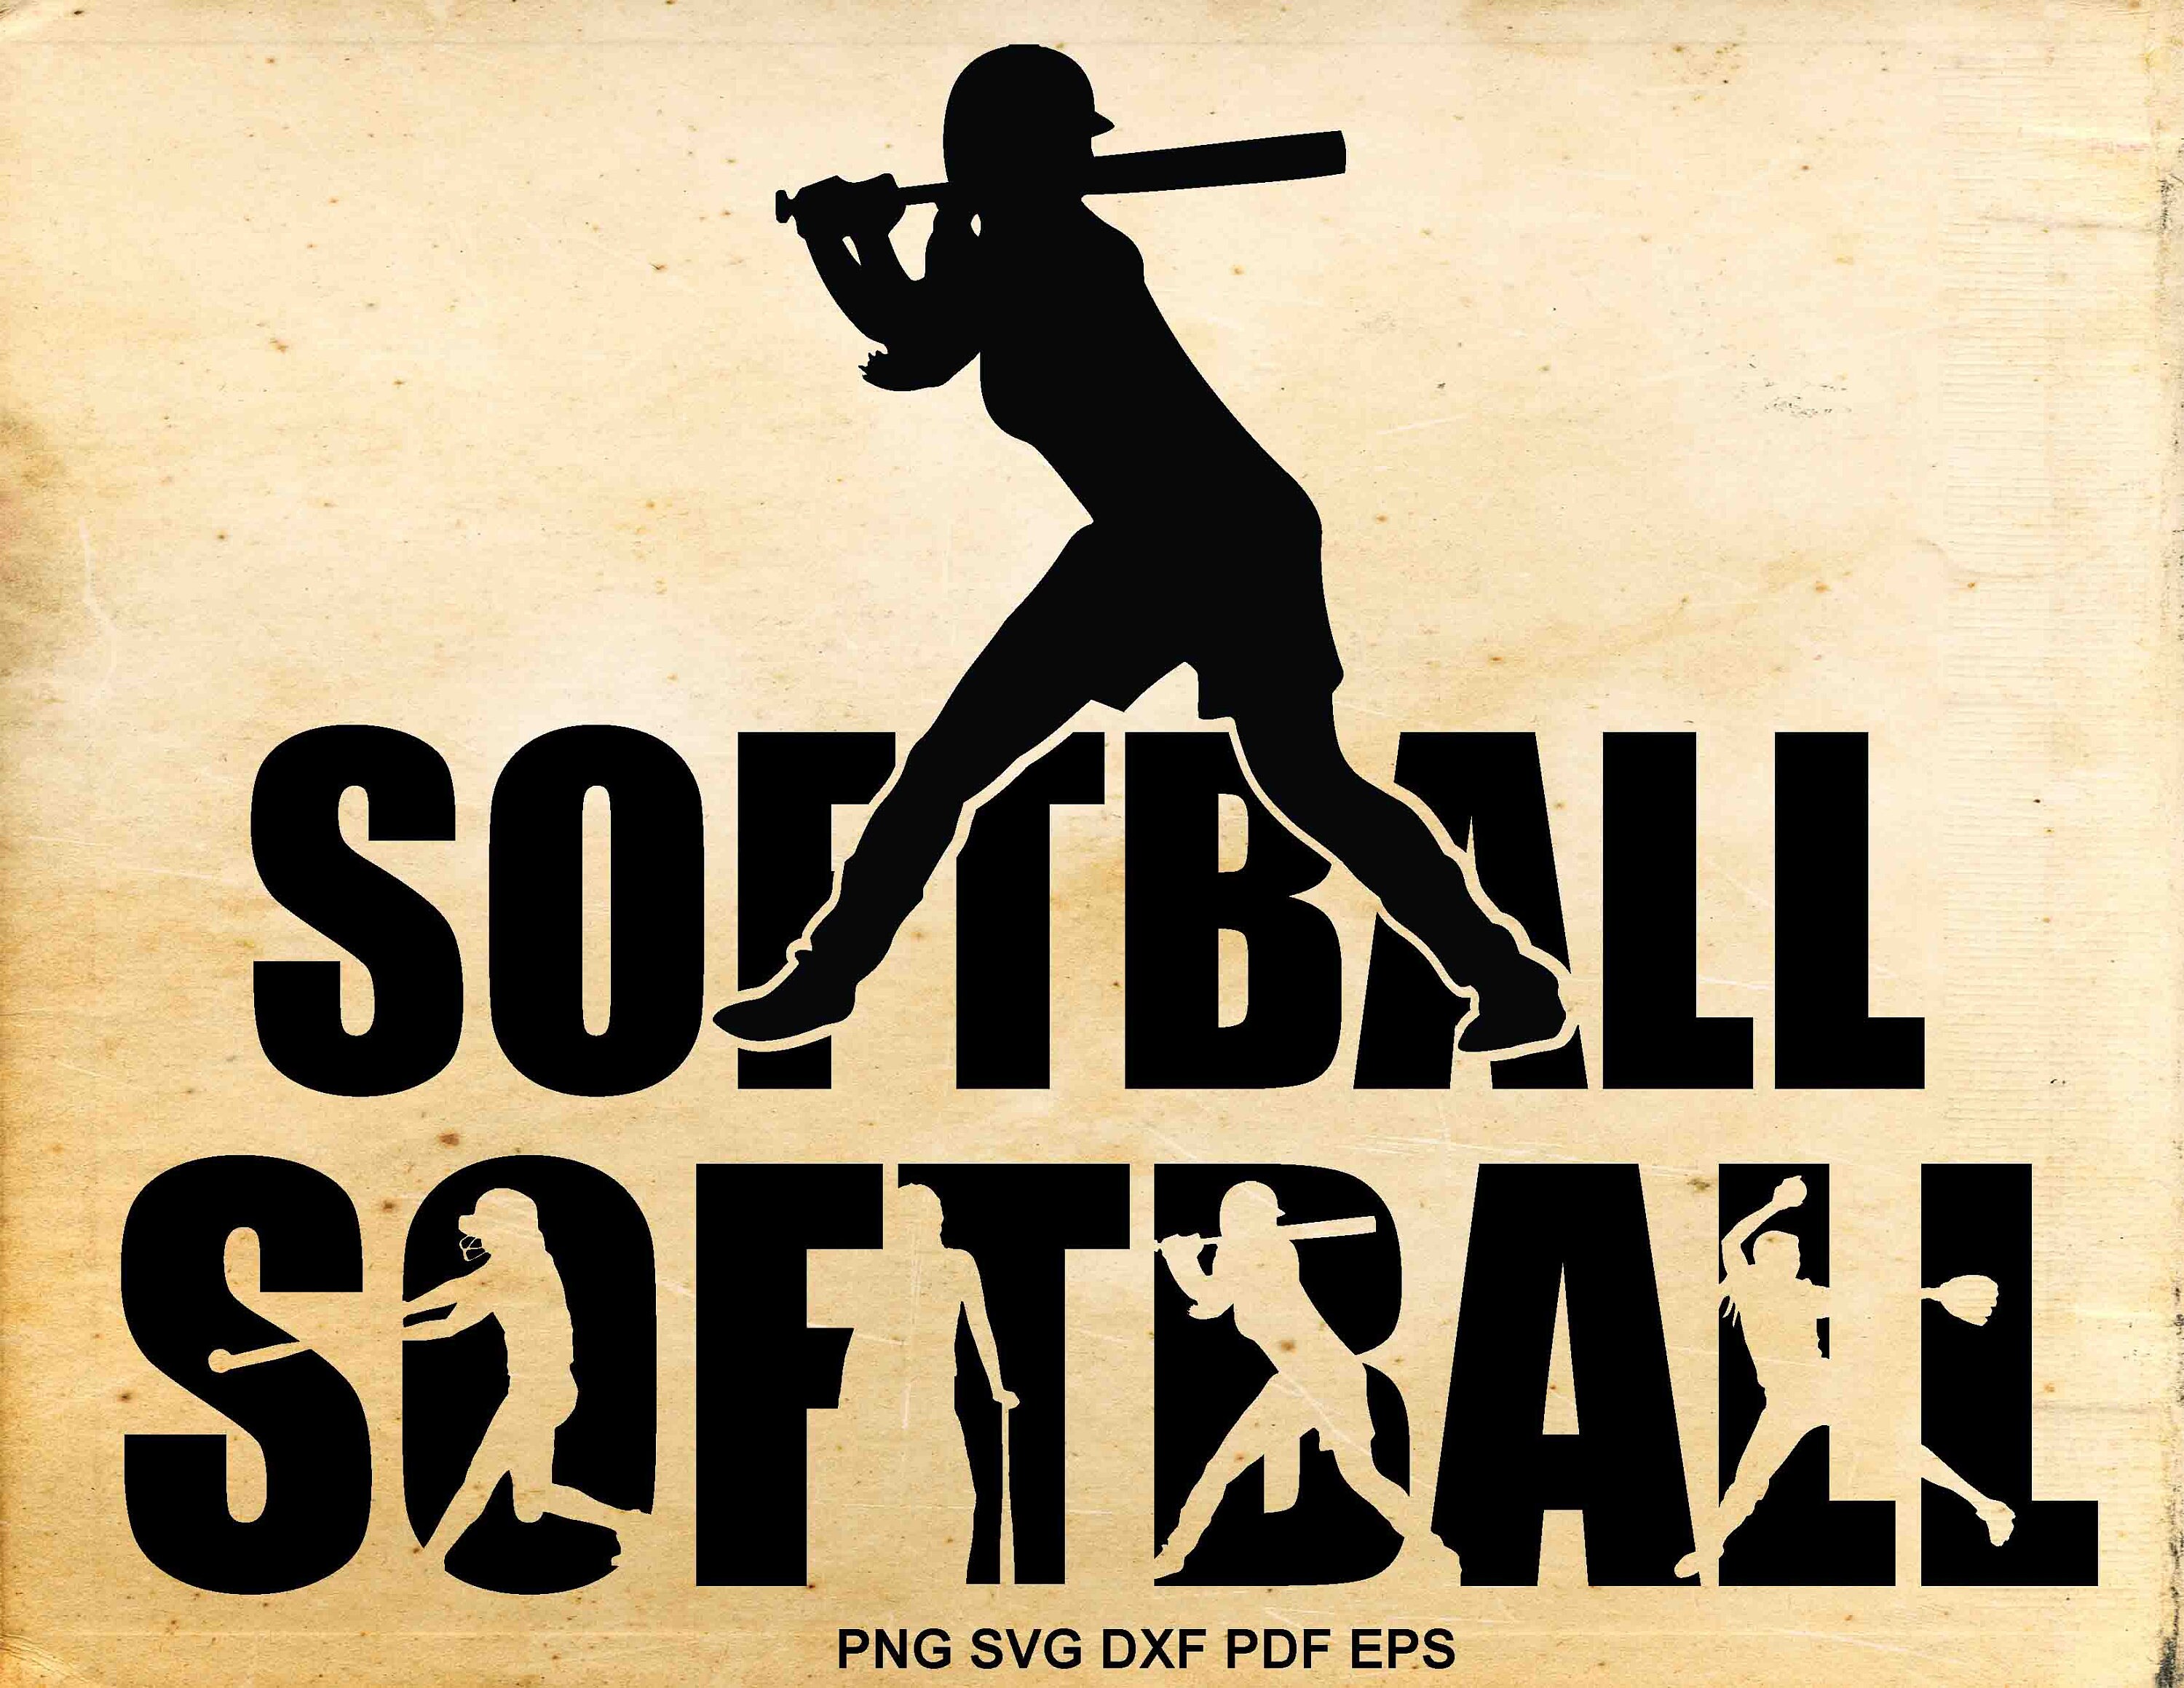 Download Softball svg files, Softball silhouette clipart, Baseball ...